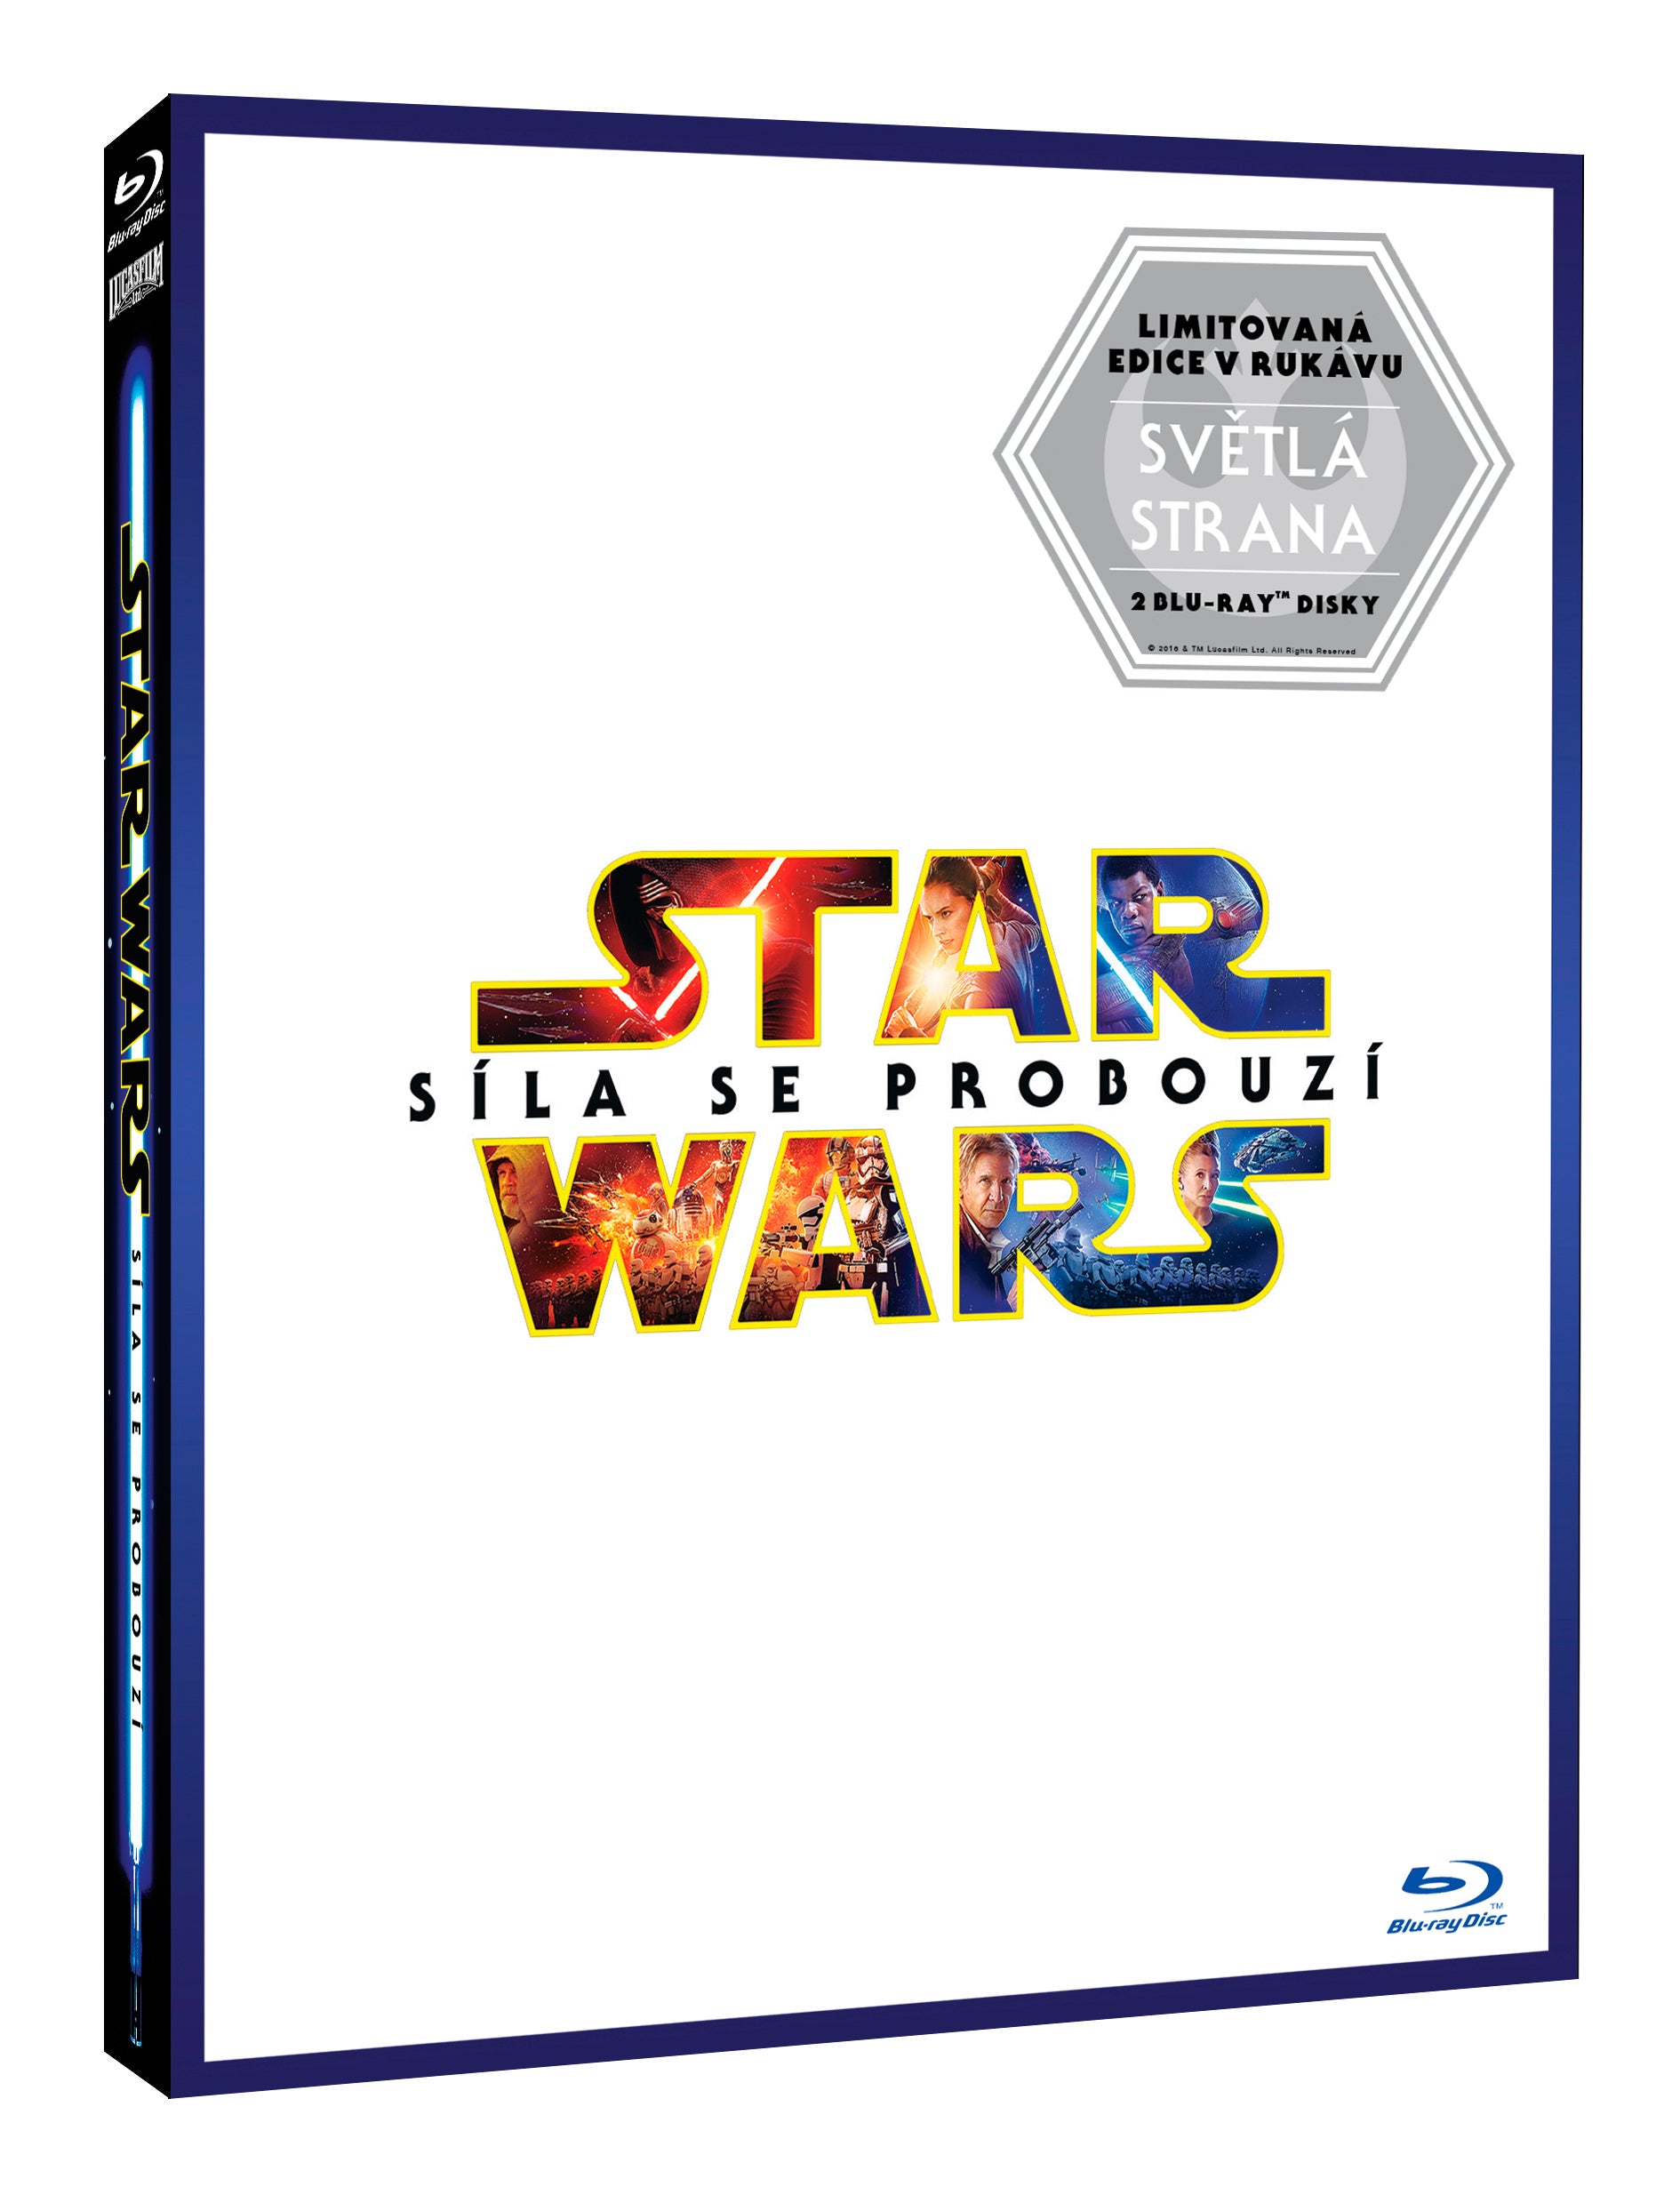 Star Wars: Sila se probouzi 2BD - Limitovana edice Lightside / Star Wars: Force Awakens - Czech version